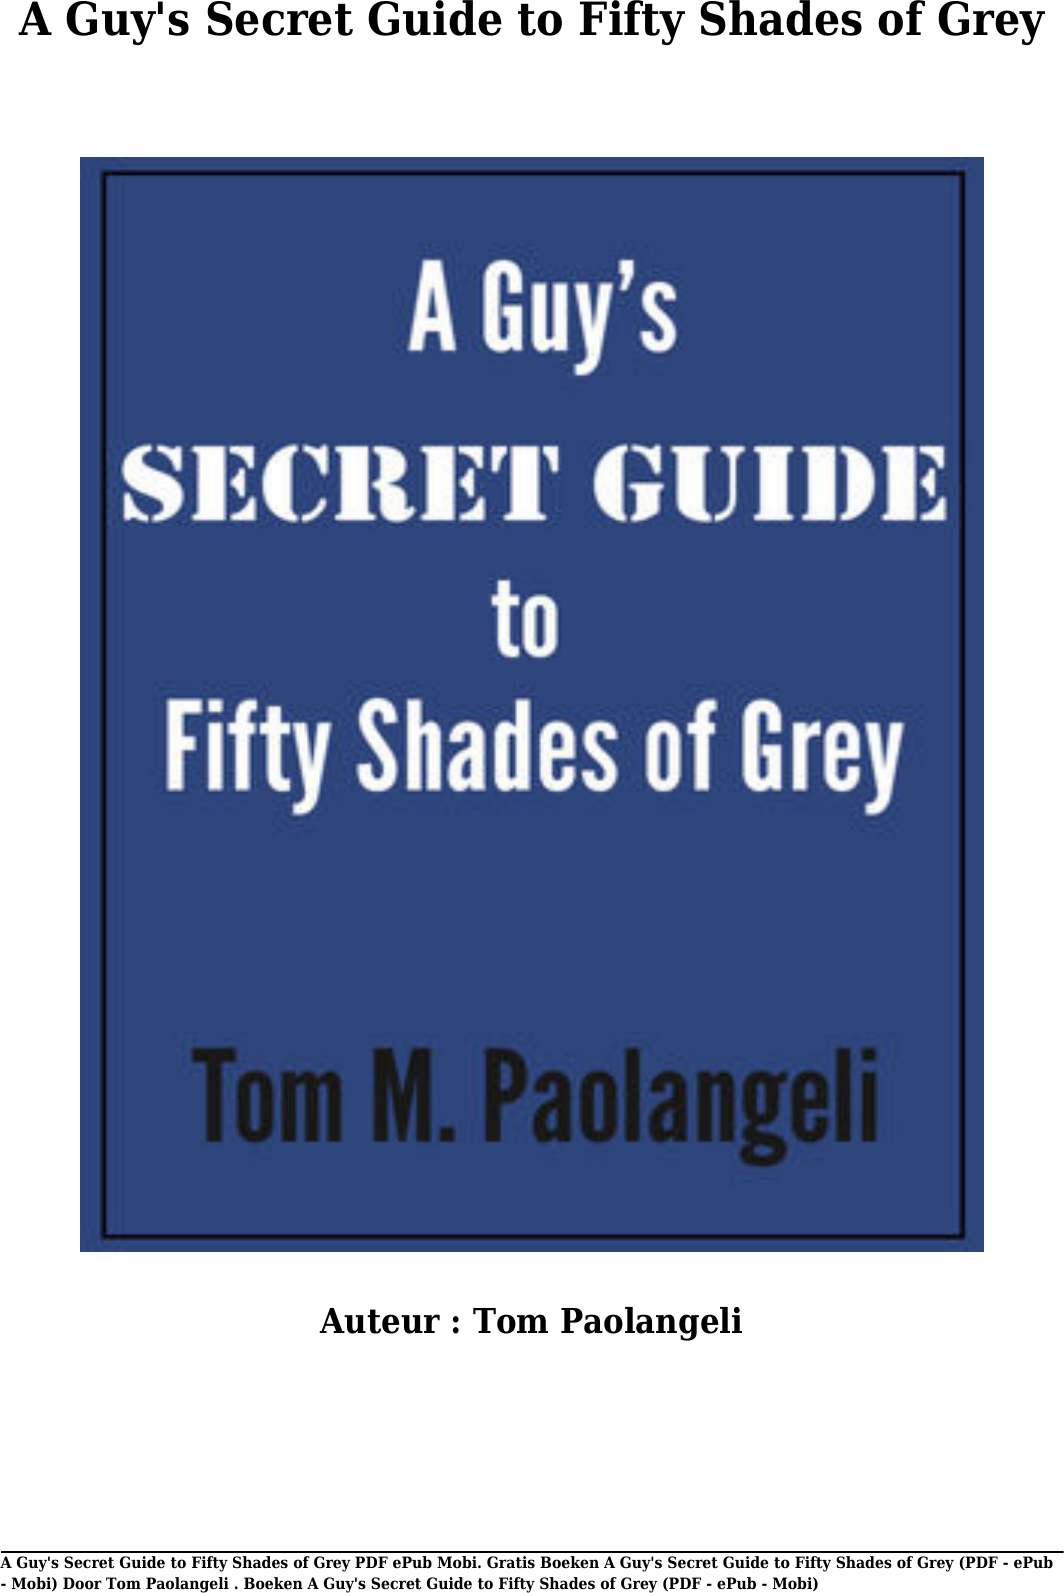 Page 1 of 11 - Gratis Boeken A Guy's Secret Guide To Fifty Shades Of Grey Van Tom Paolangeli(PDF - EPub Mobi) (PDF E Pub Paola